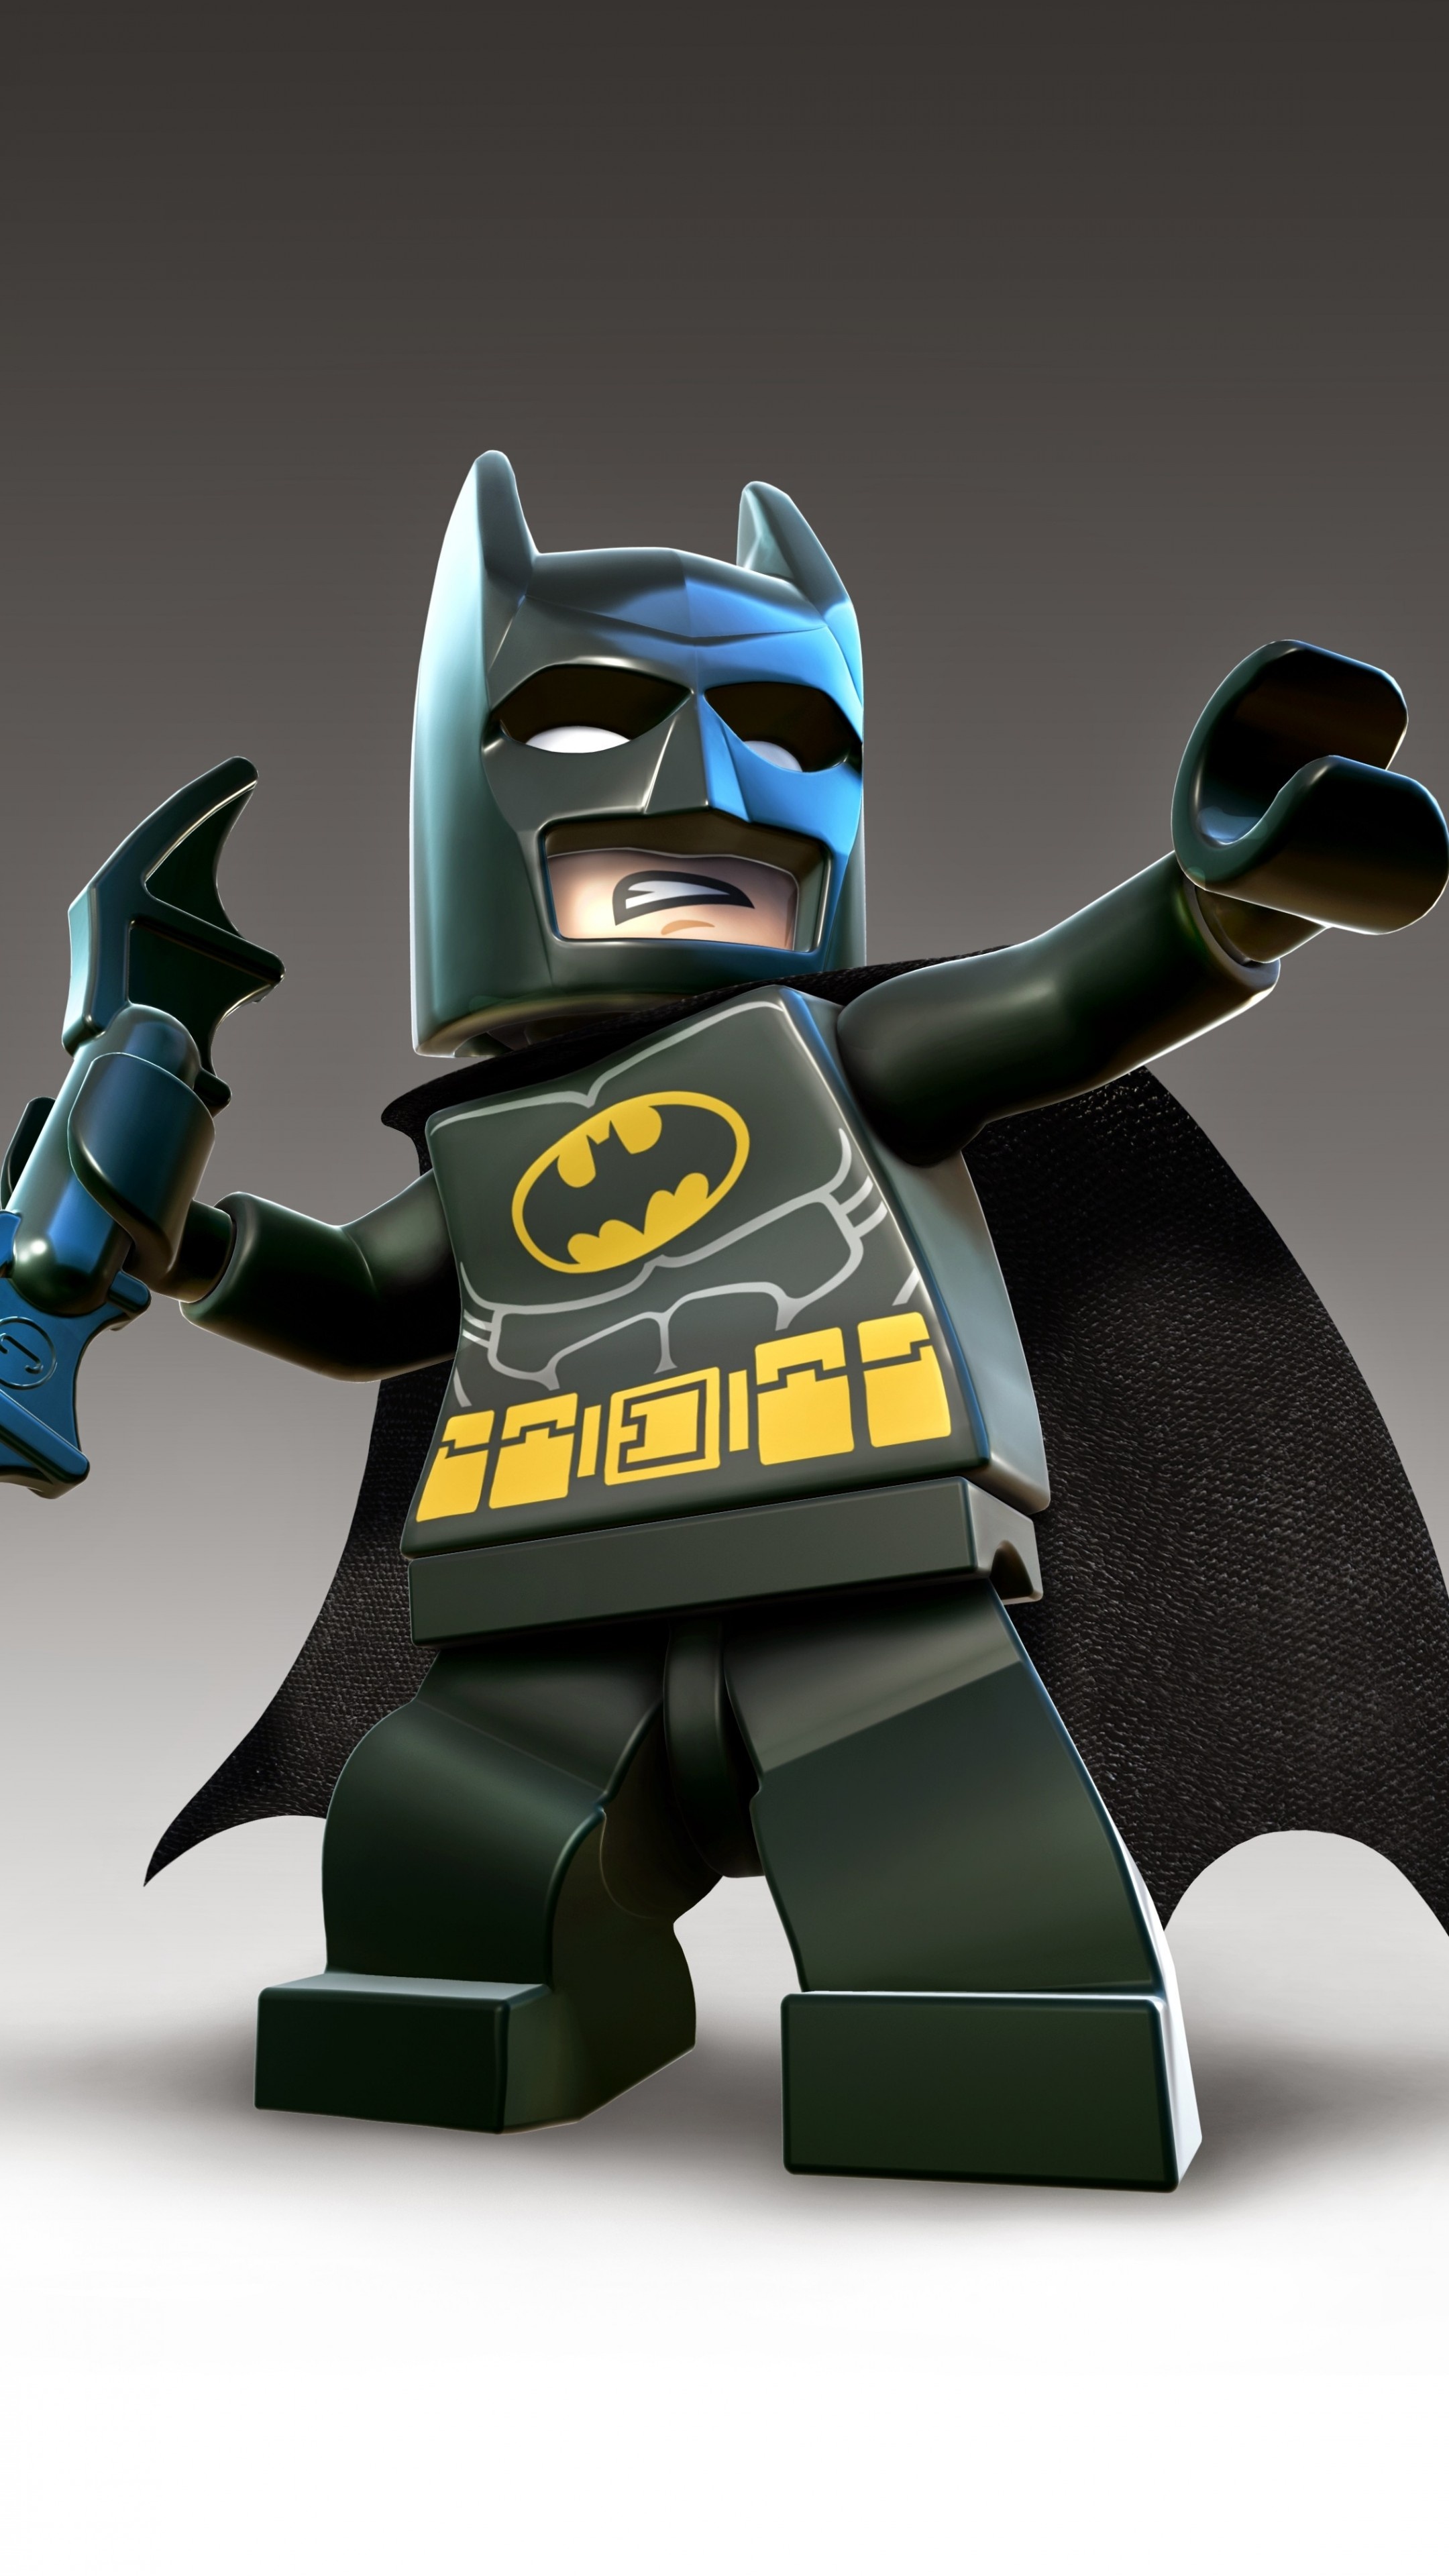 Lego Batman Movie wallpaper, Batman Lego mashup, Best movie moments, 2160x3840 4K Handy